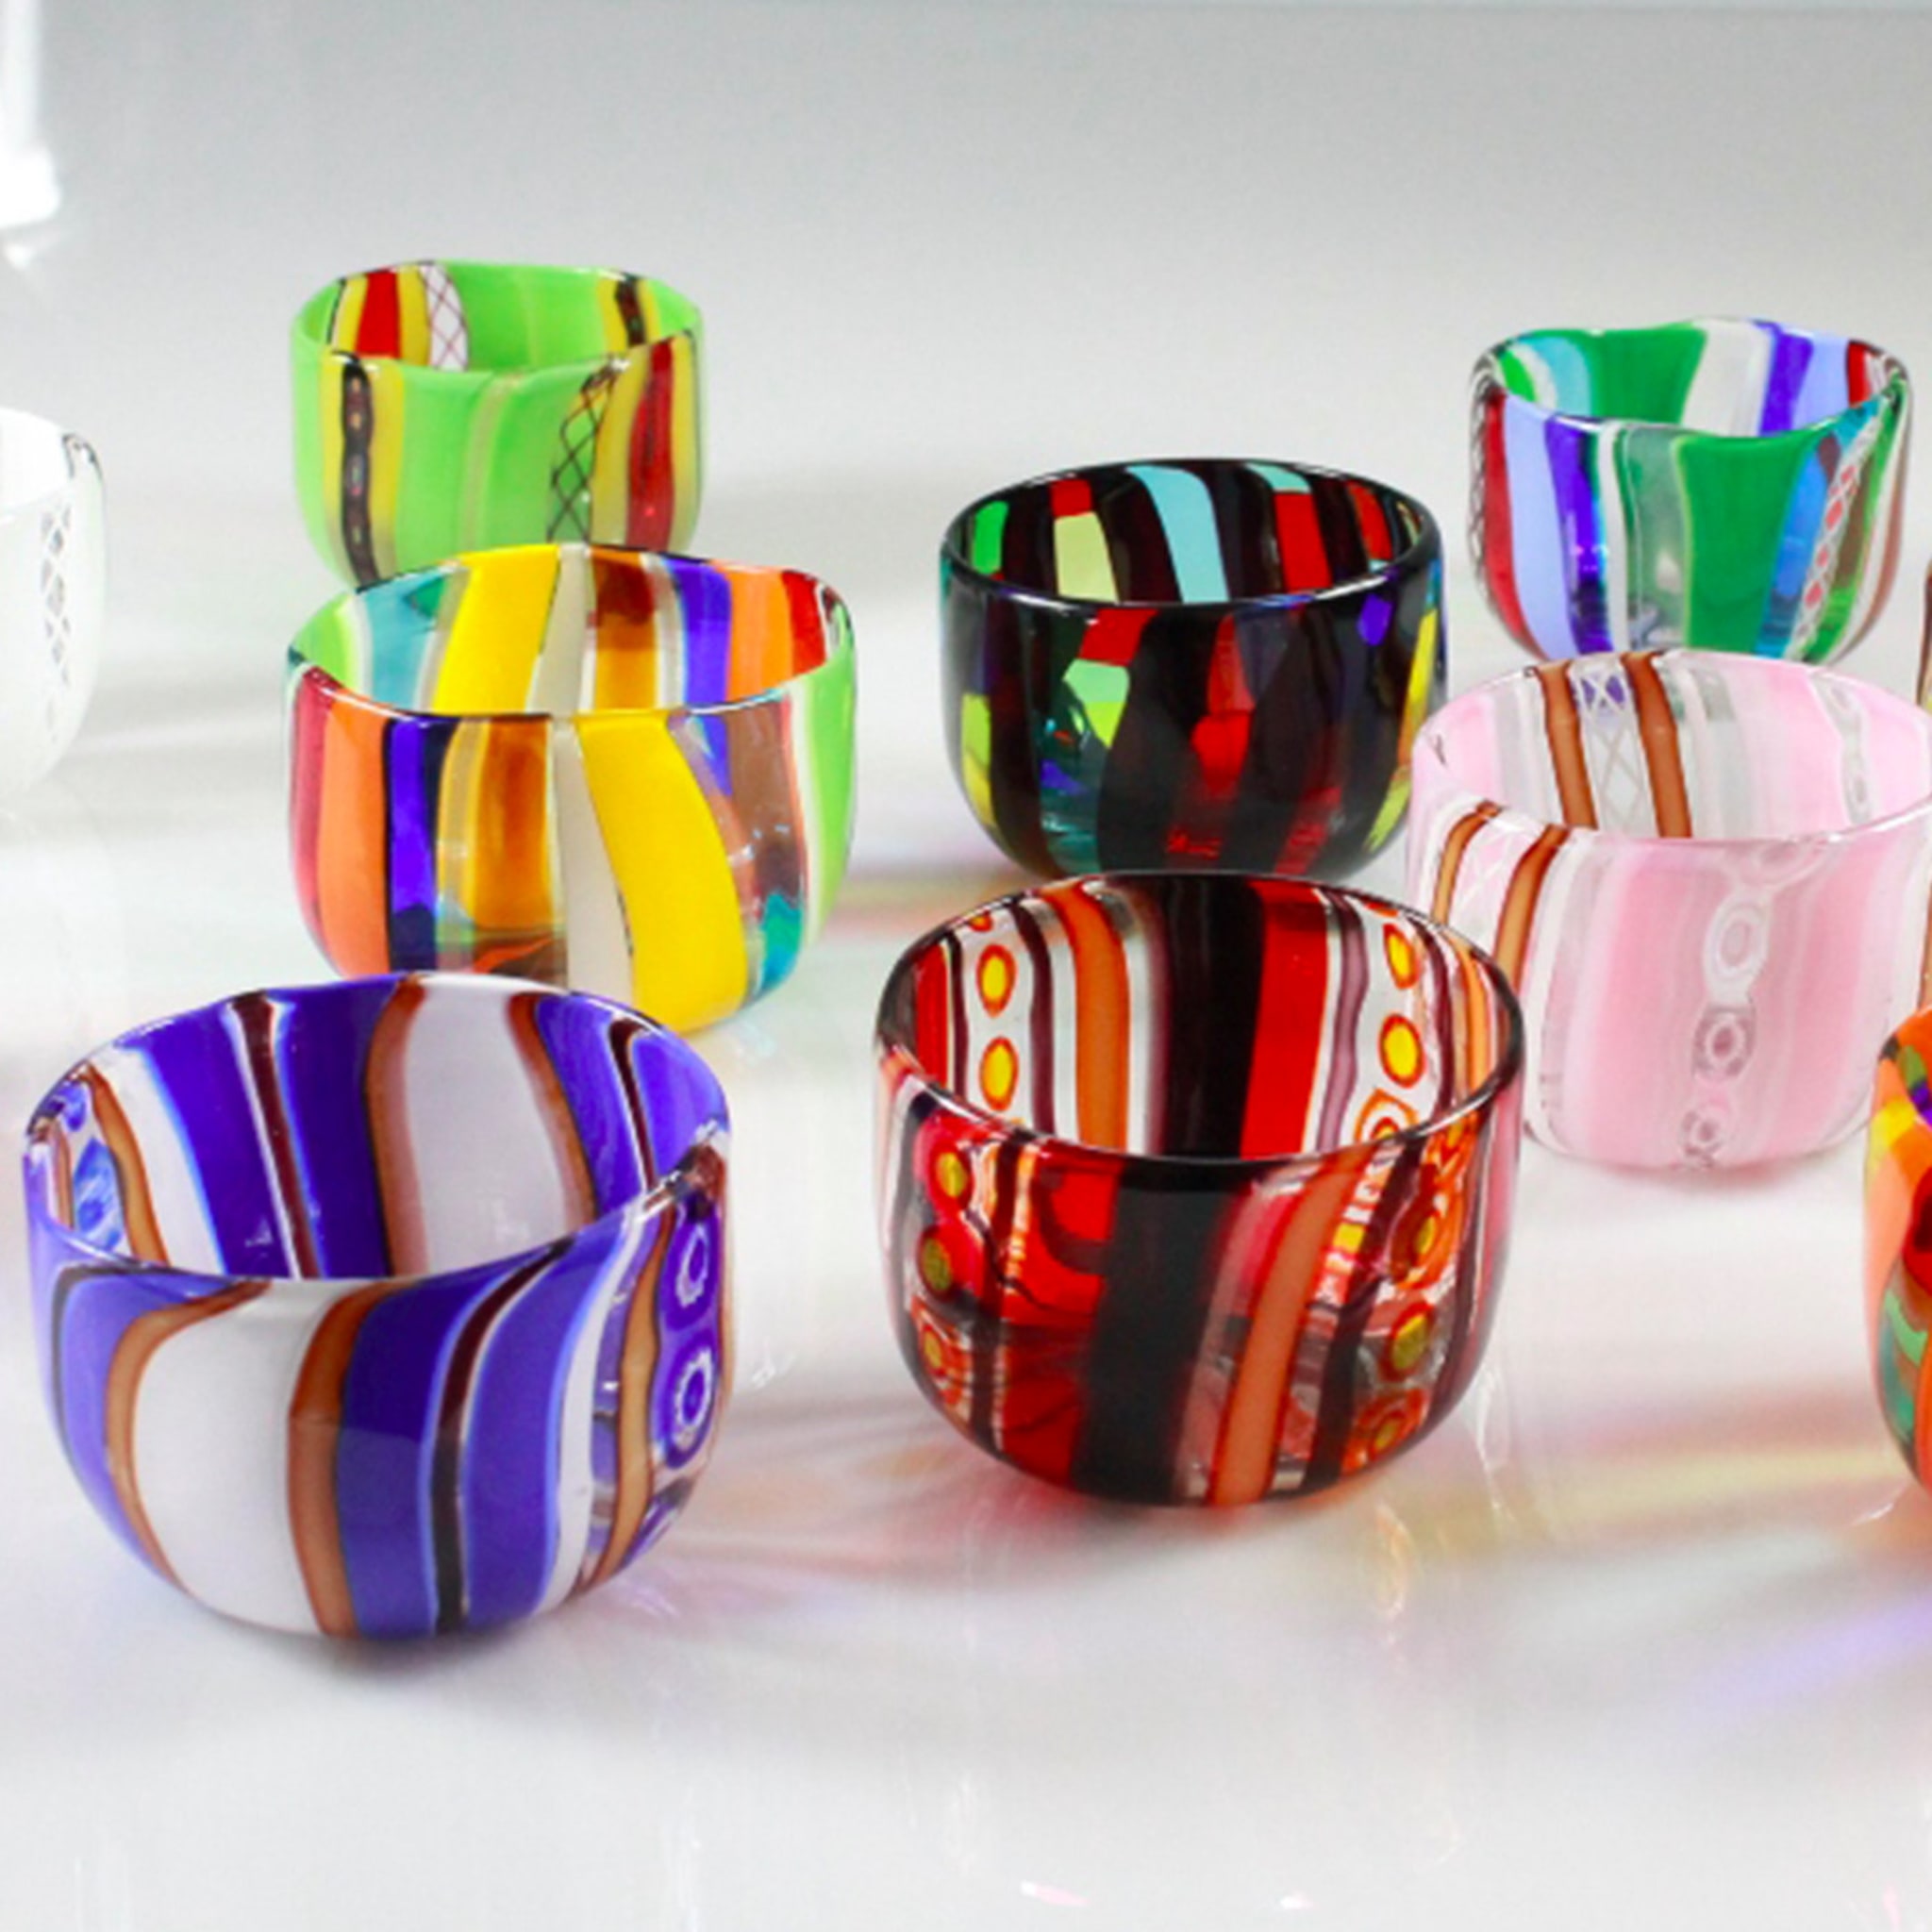 Fantasy Set of 6 Bowls #1 in Murano Glass - Alternative view 1